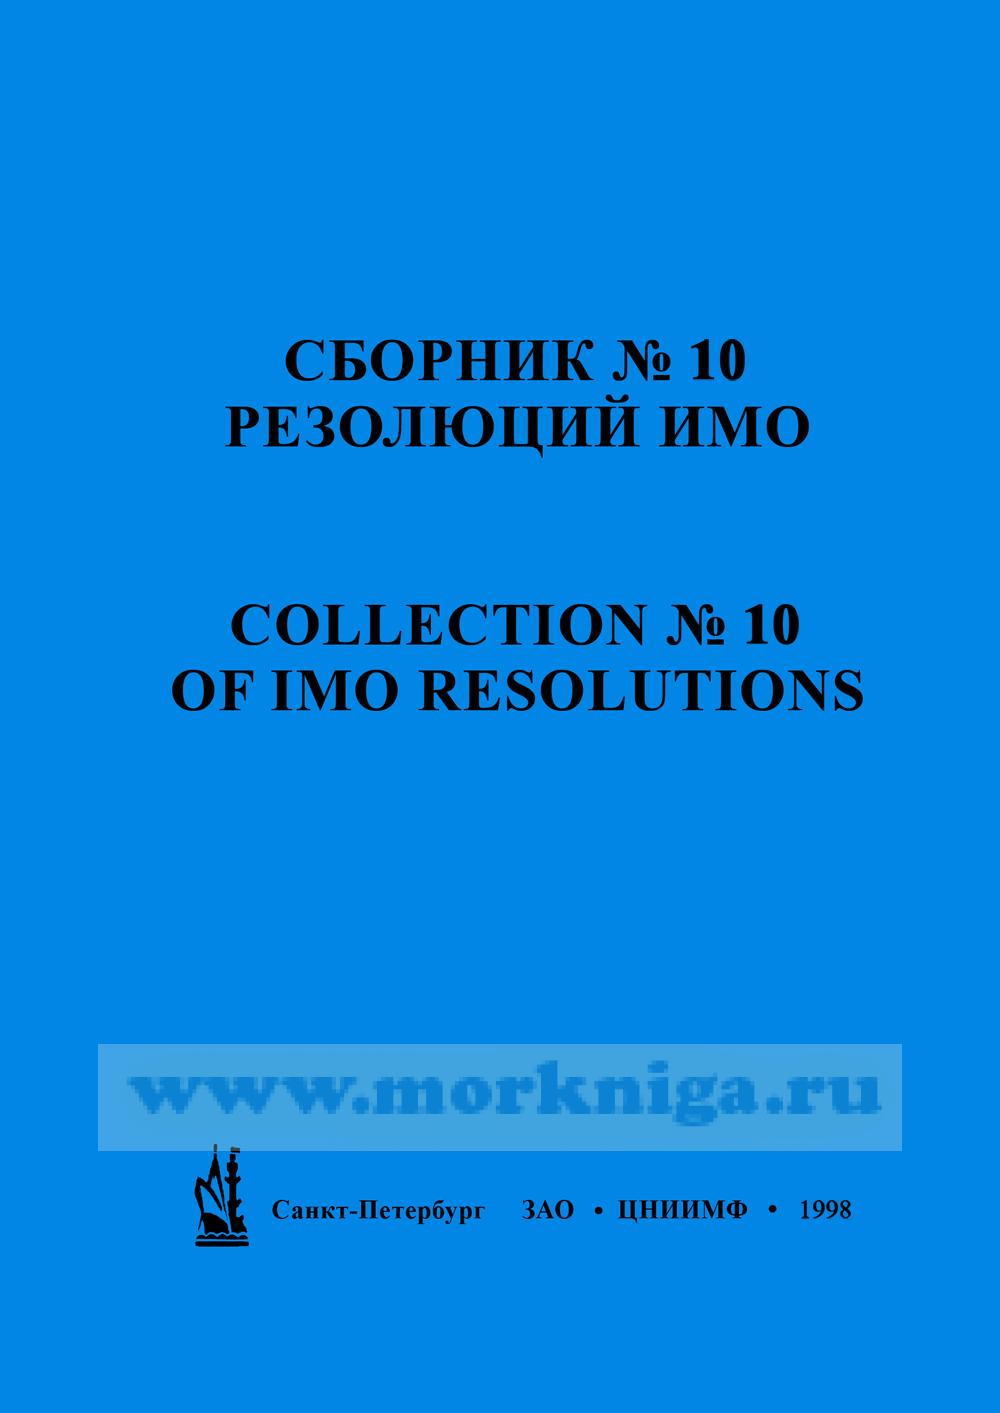 Сборник № 10 резолюций ИМО. Collection No.10 of IMO Resolutions